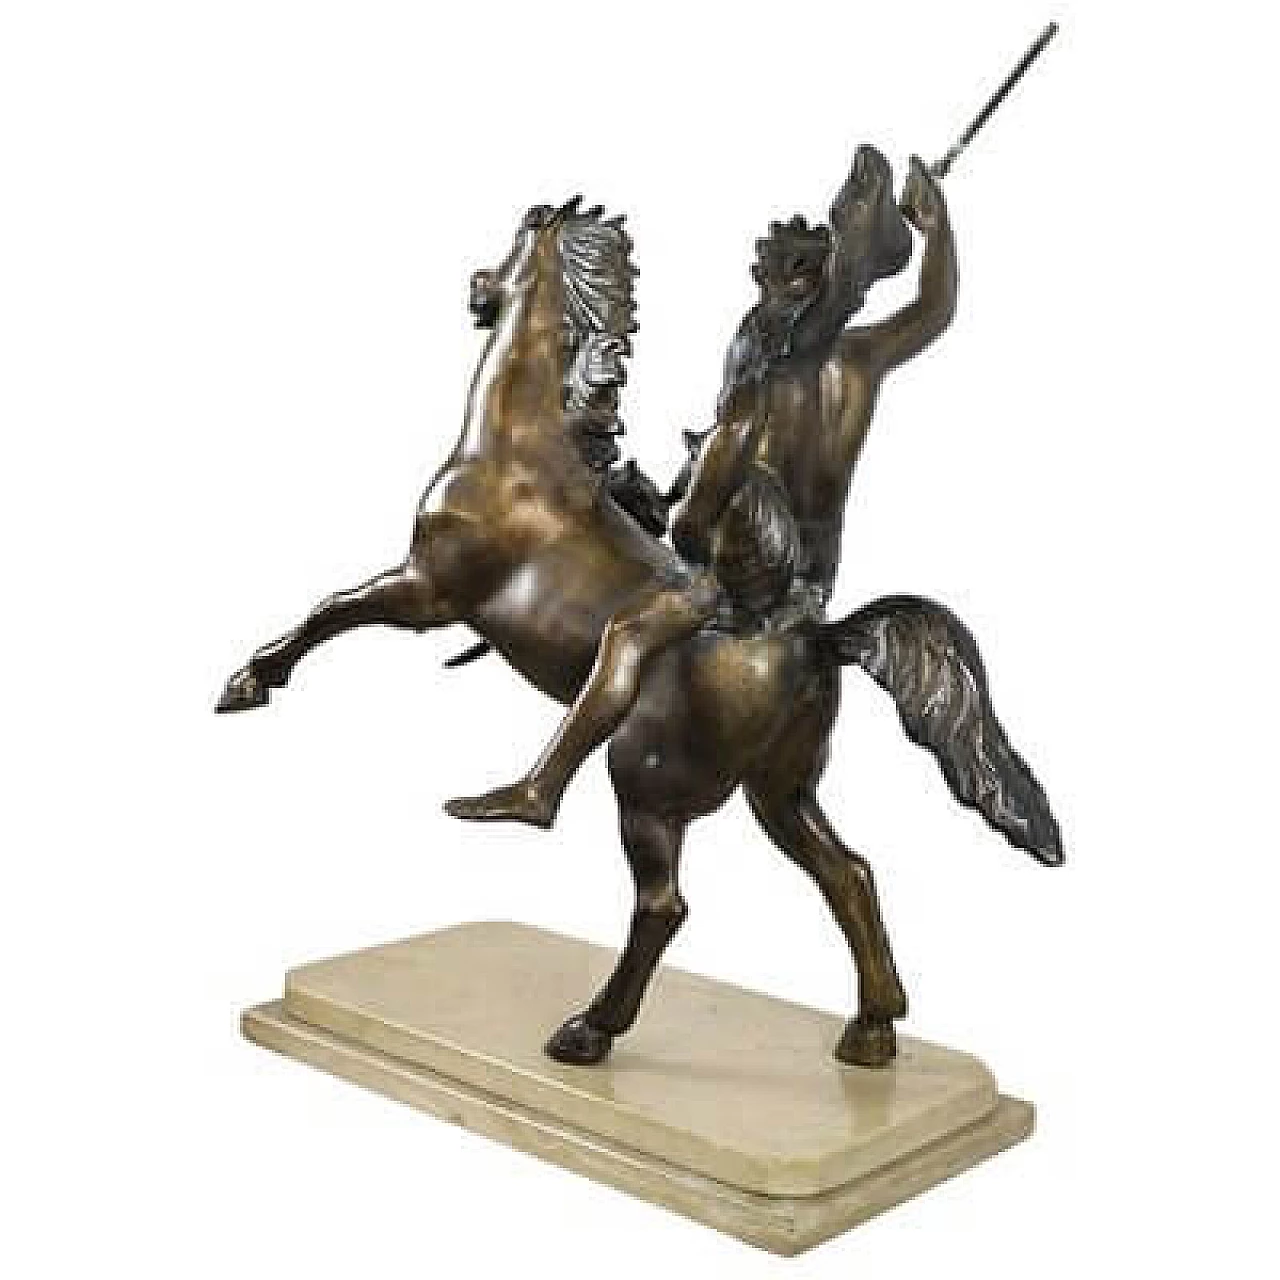 Indian warrior on horseback, reproduction after Tommaso Campajola, bronze sculpture 5